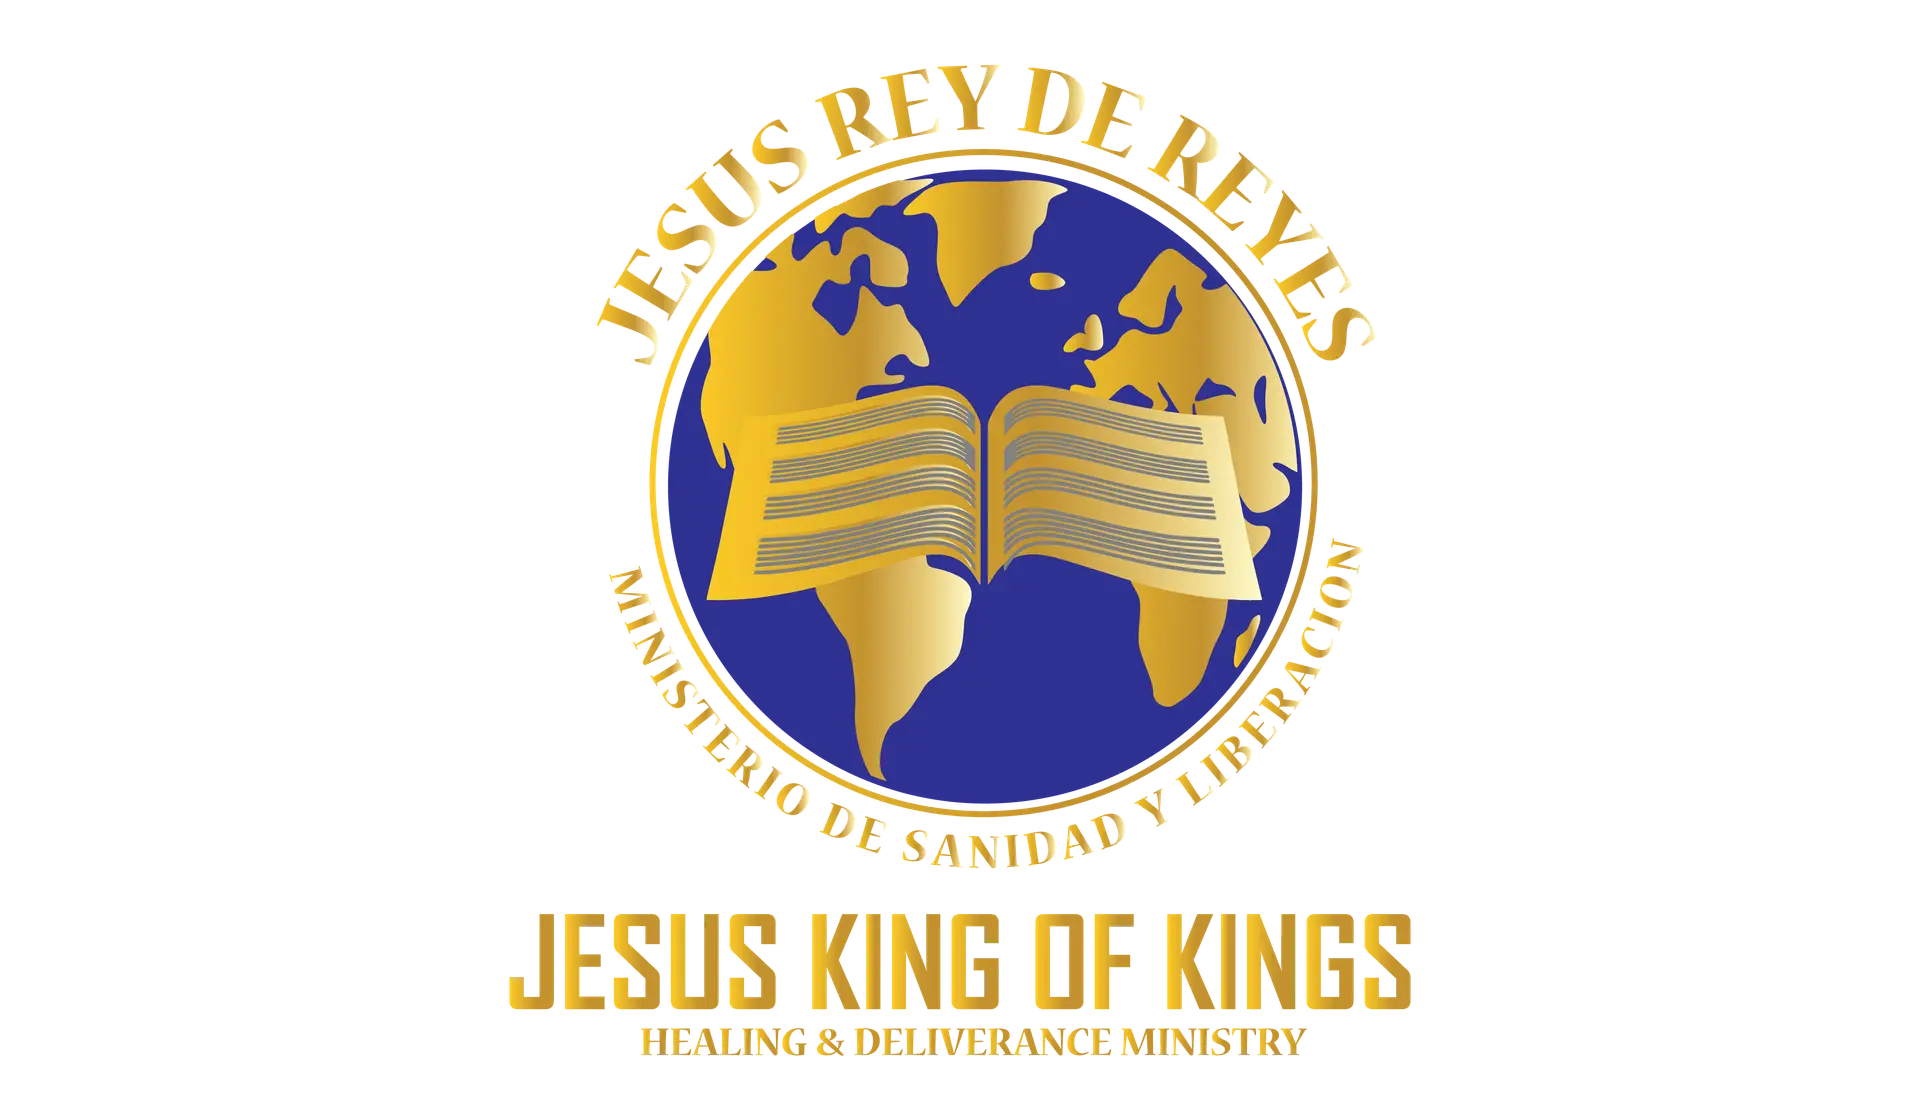 jesus rey de reyes logo